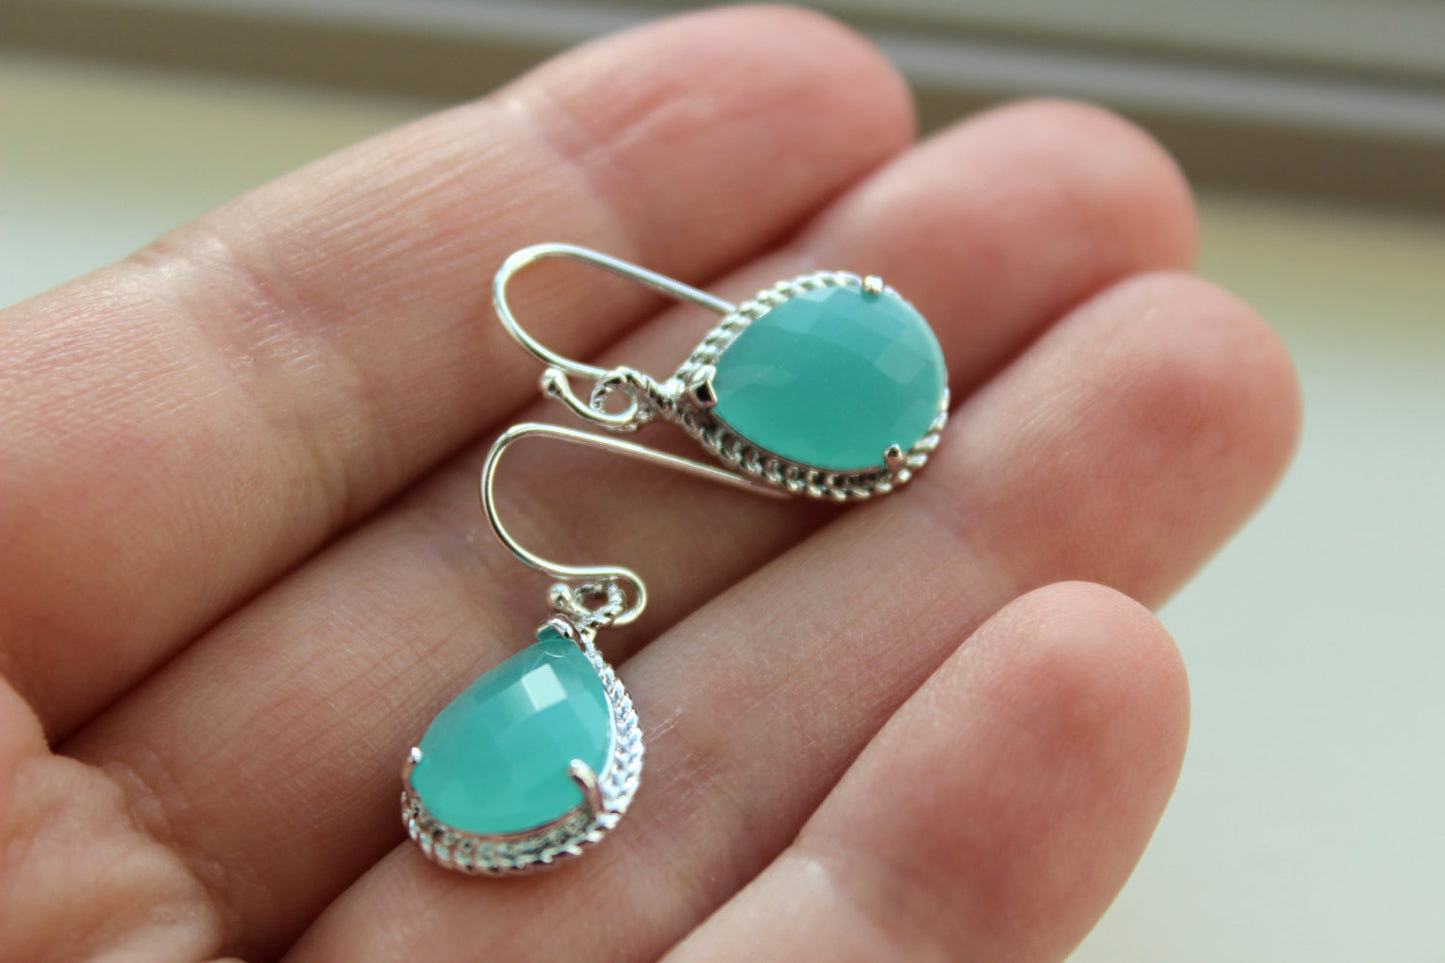 Silver Blue Mint Earrings Wedding Jewelry - Aqua Blue Mint Bridesmaid Earrings Gift Personalized Under 25 Mint Green Bridal Jewelry